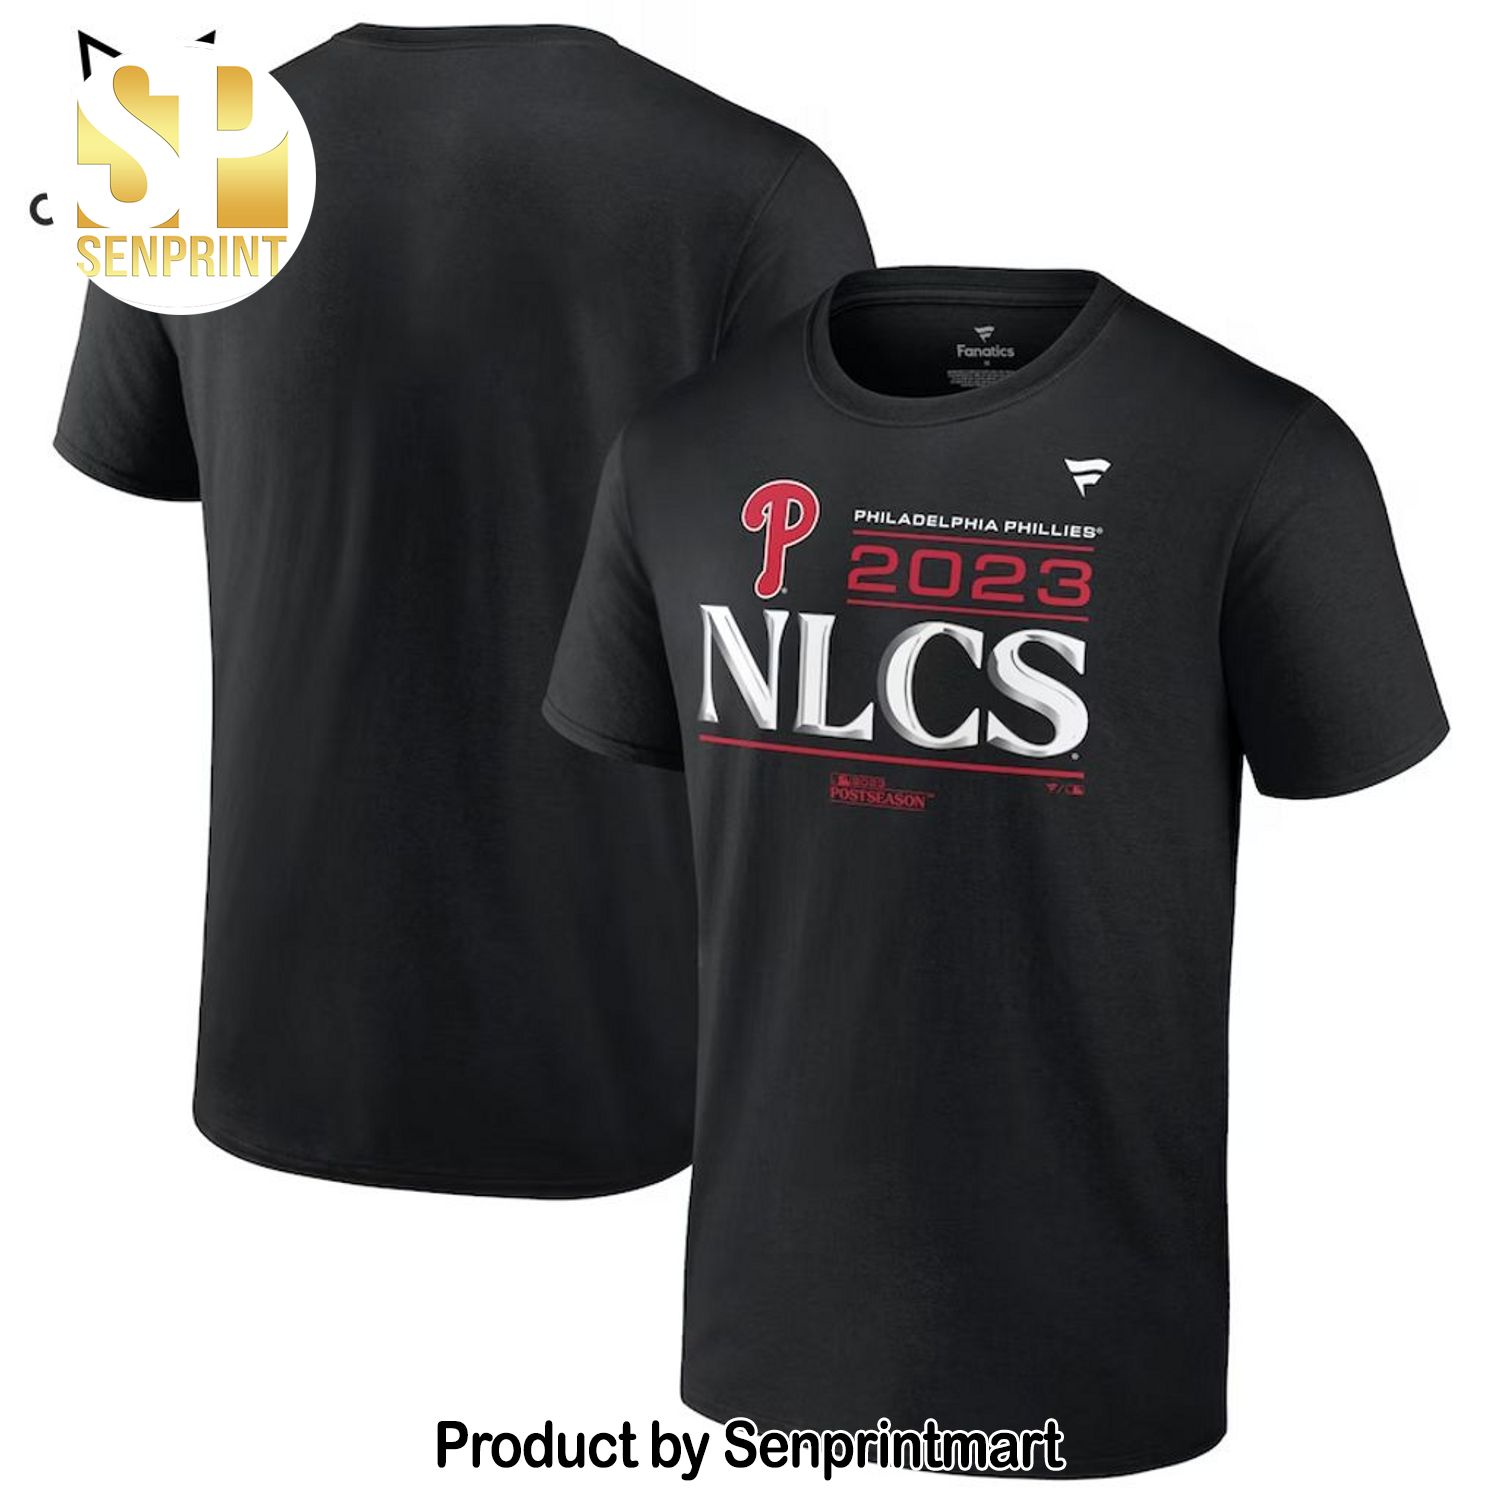 Philadelphia Phillies 2023 NLCS Black Full Printing 3D Shirt